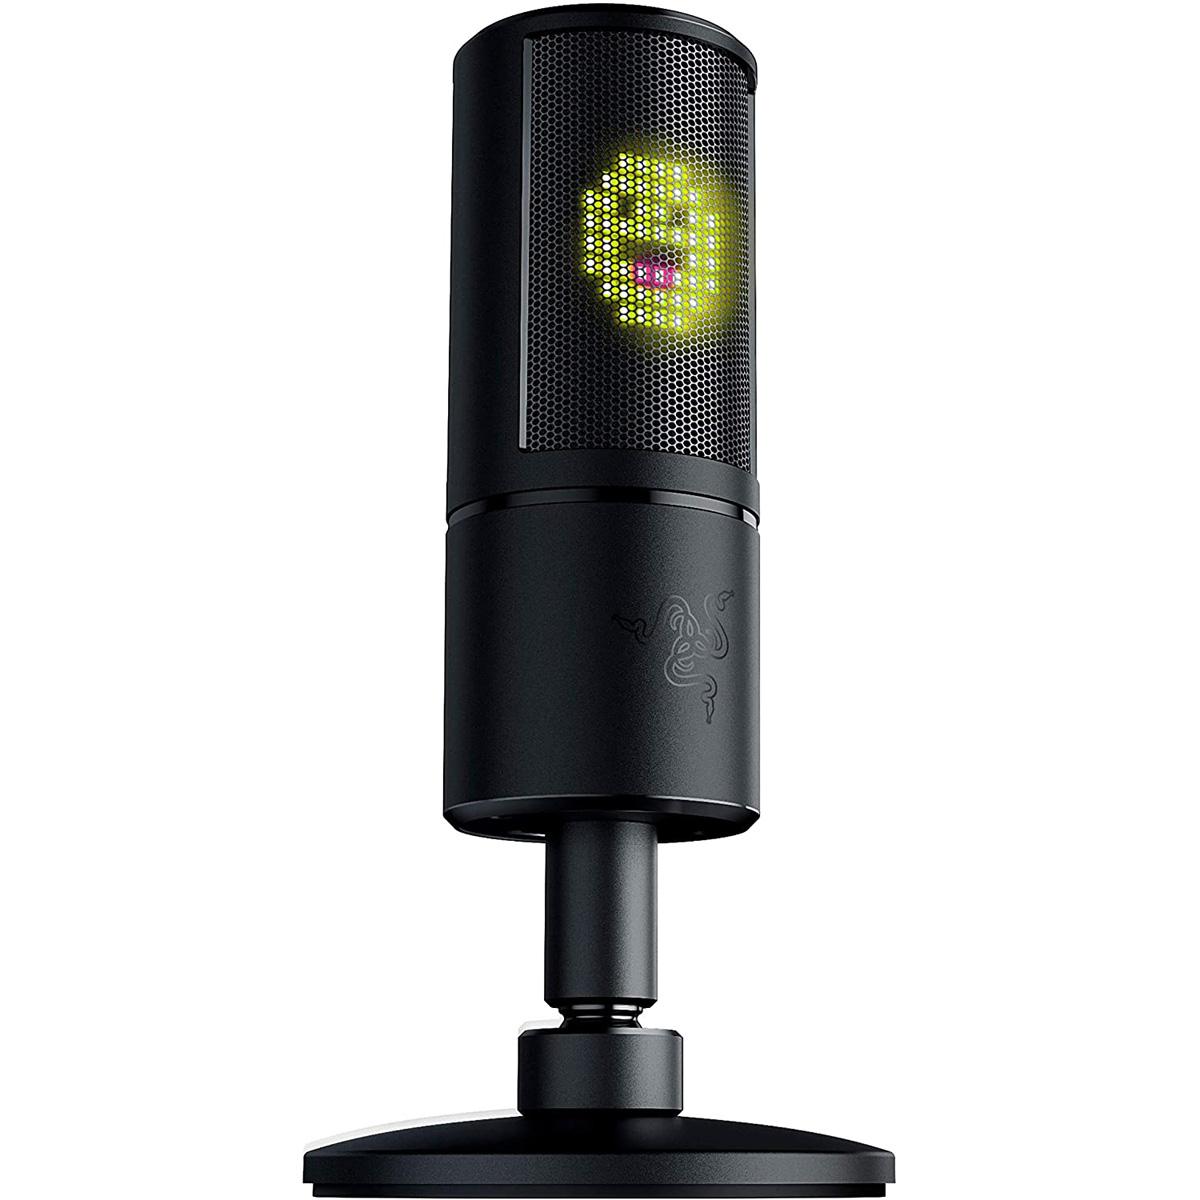 Razer Seiren Emote Streaming Microphone for $100.99 Shipped